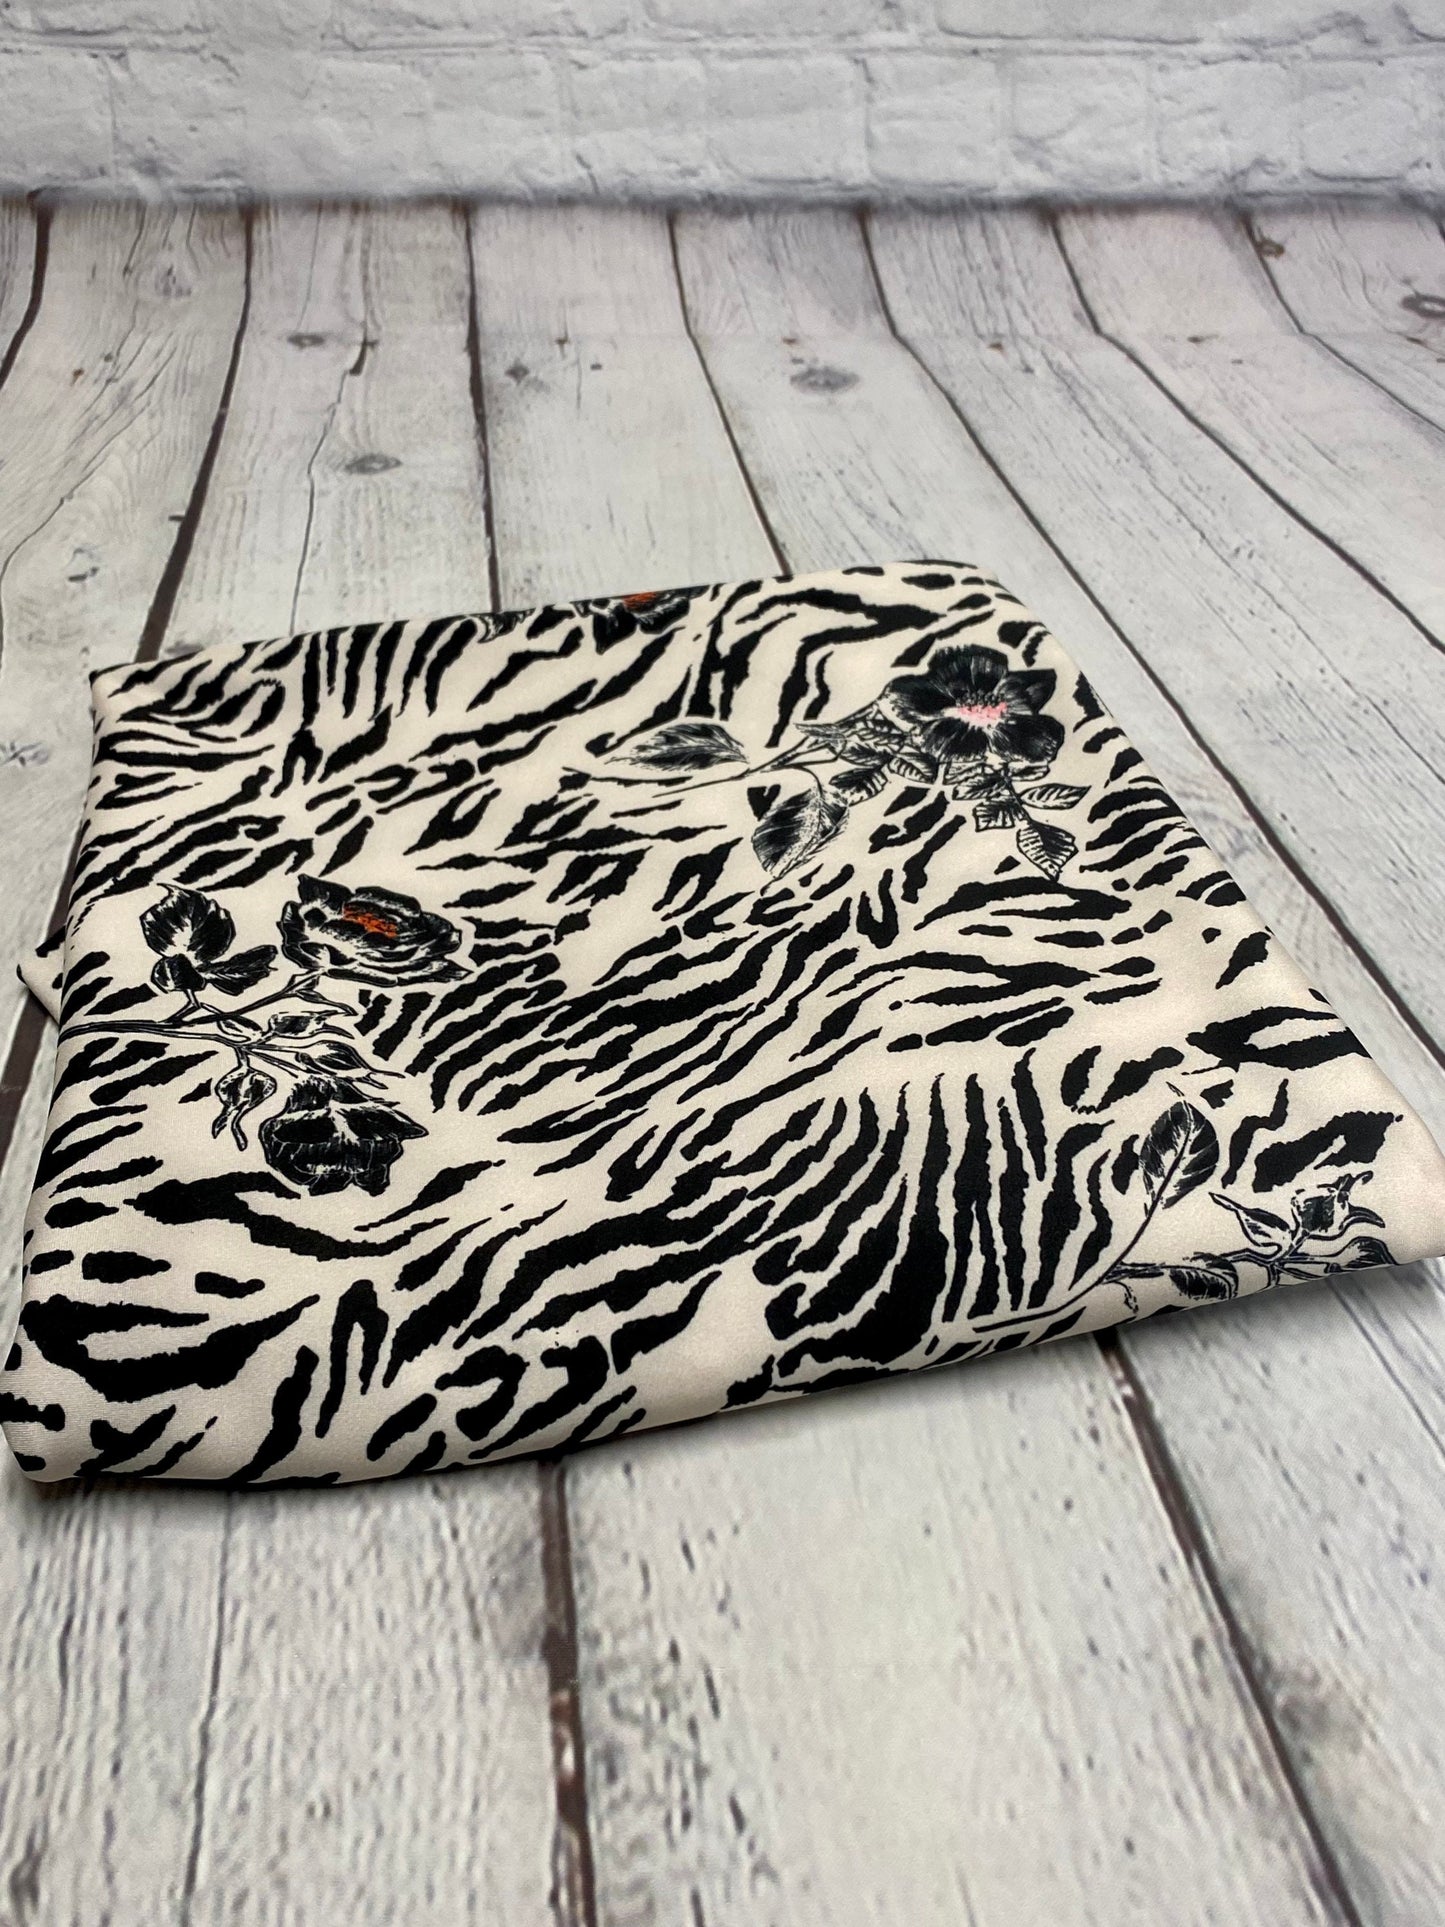 4 Way Stretch Print Nylon Spandex Fabric By The Yard Tricot Swim Wear Bikini Active Wear Cream Cheetah Rose Zebra Animal  Print 280 GSM